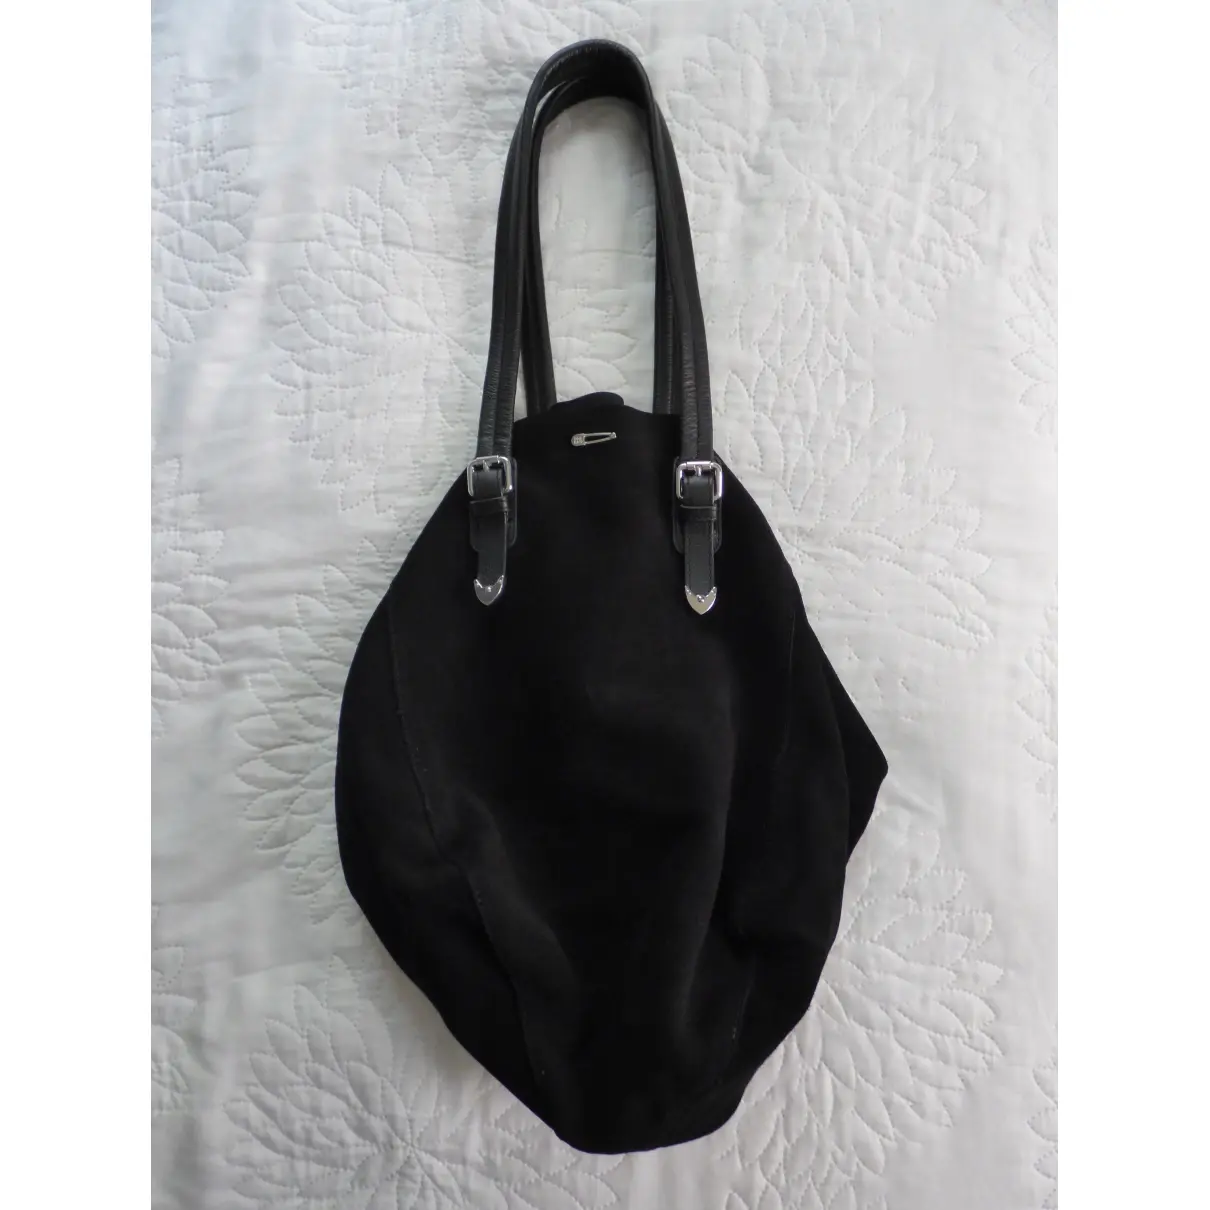 Buy Ikks Leather handbag online